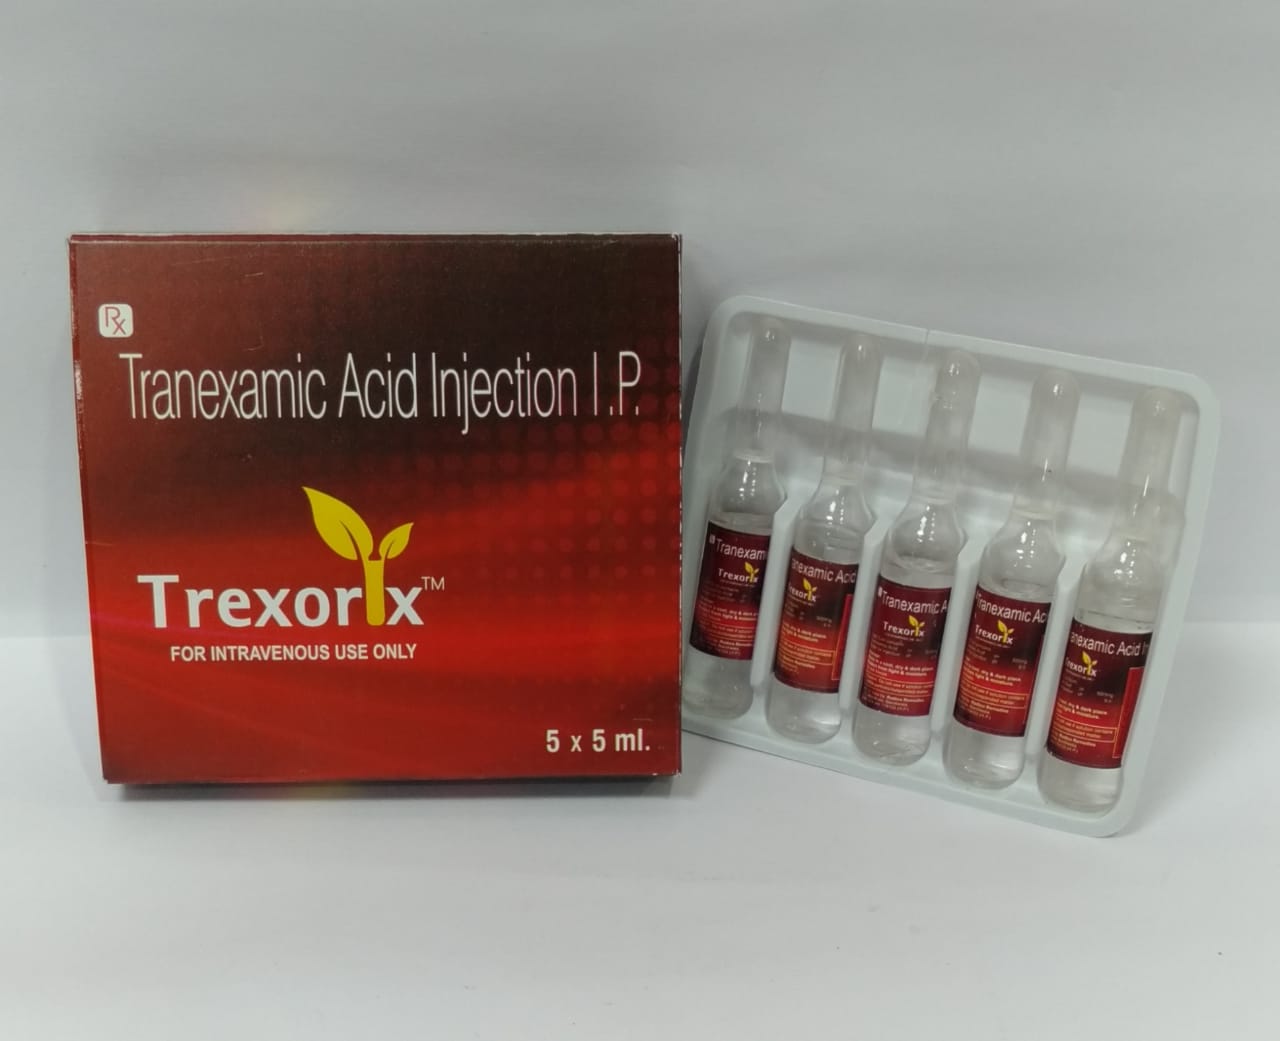 Trexorix Injection